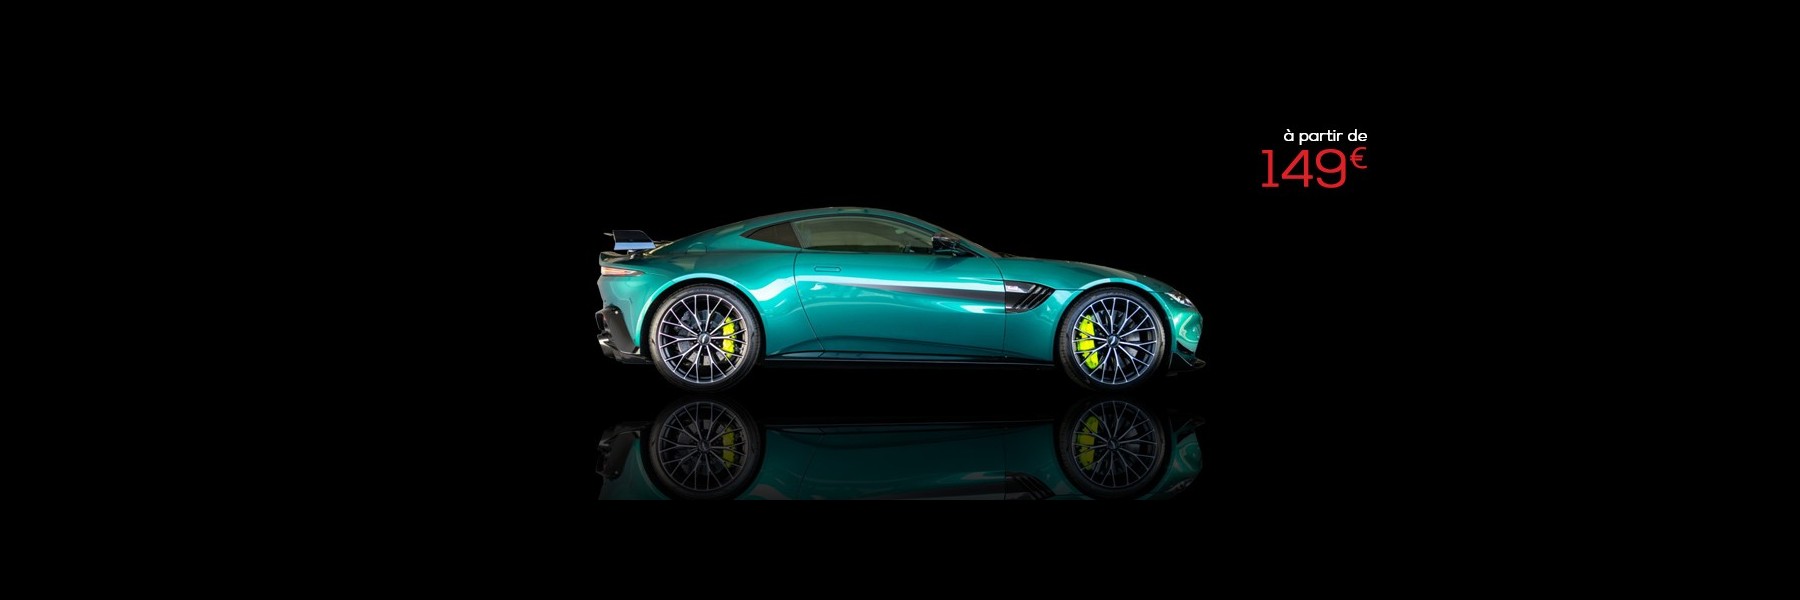 Stage de pilotage Aston Martin Vantage F1 Edition